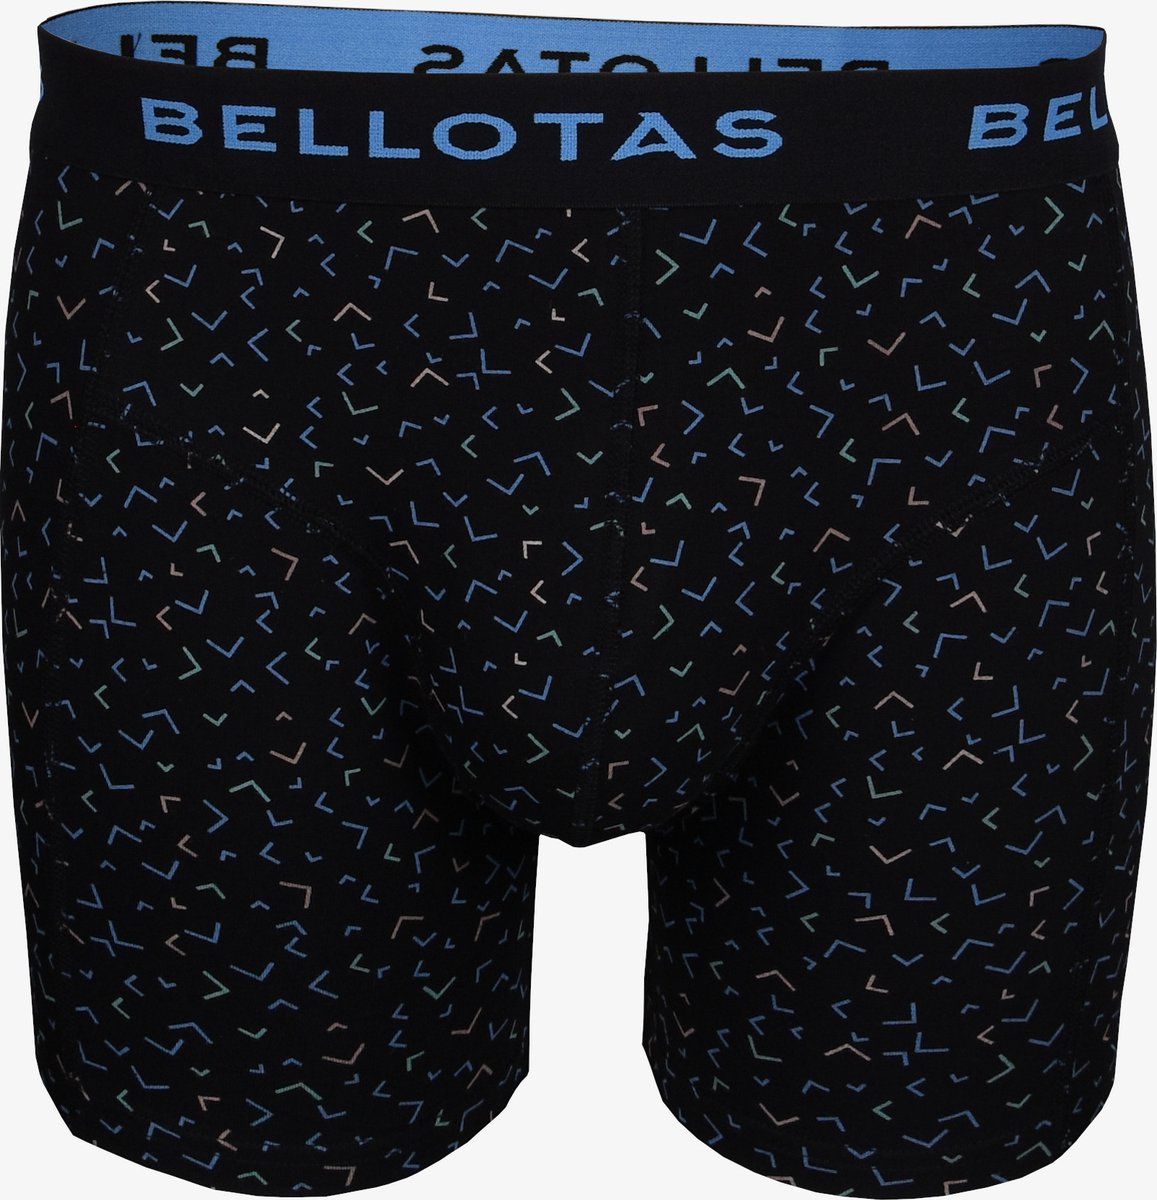 Bellotas - Boxershort - Gilles S